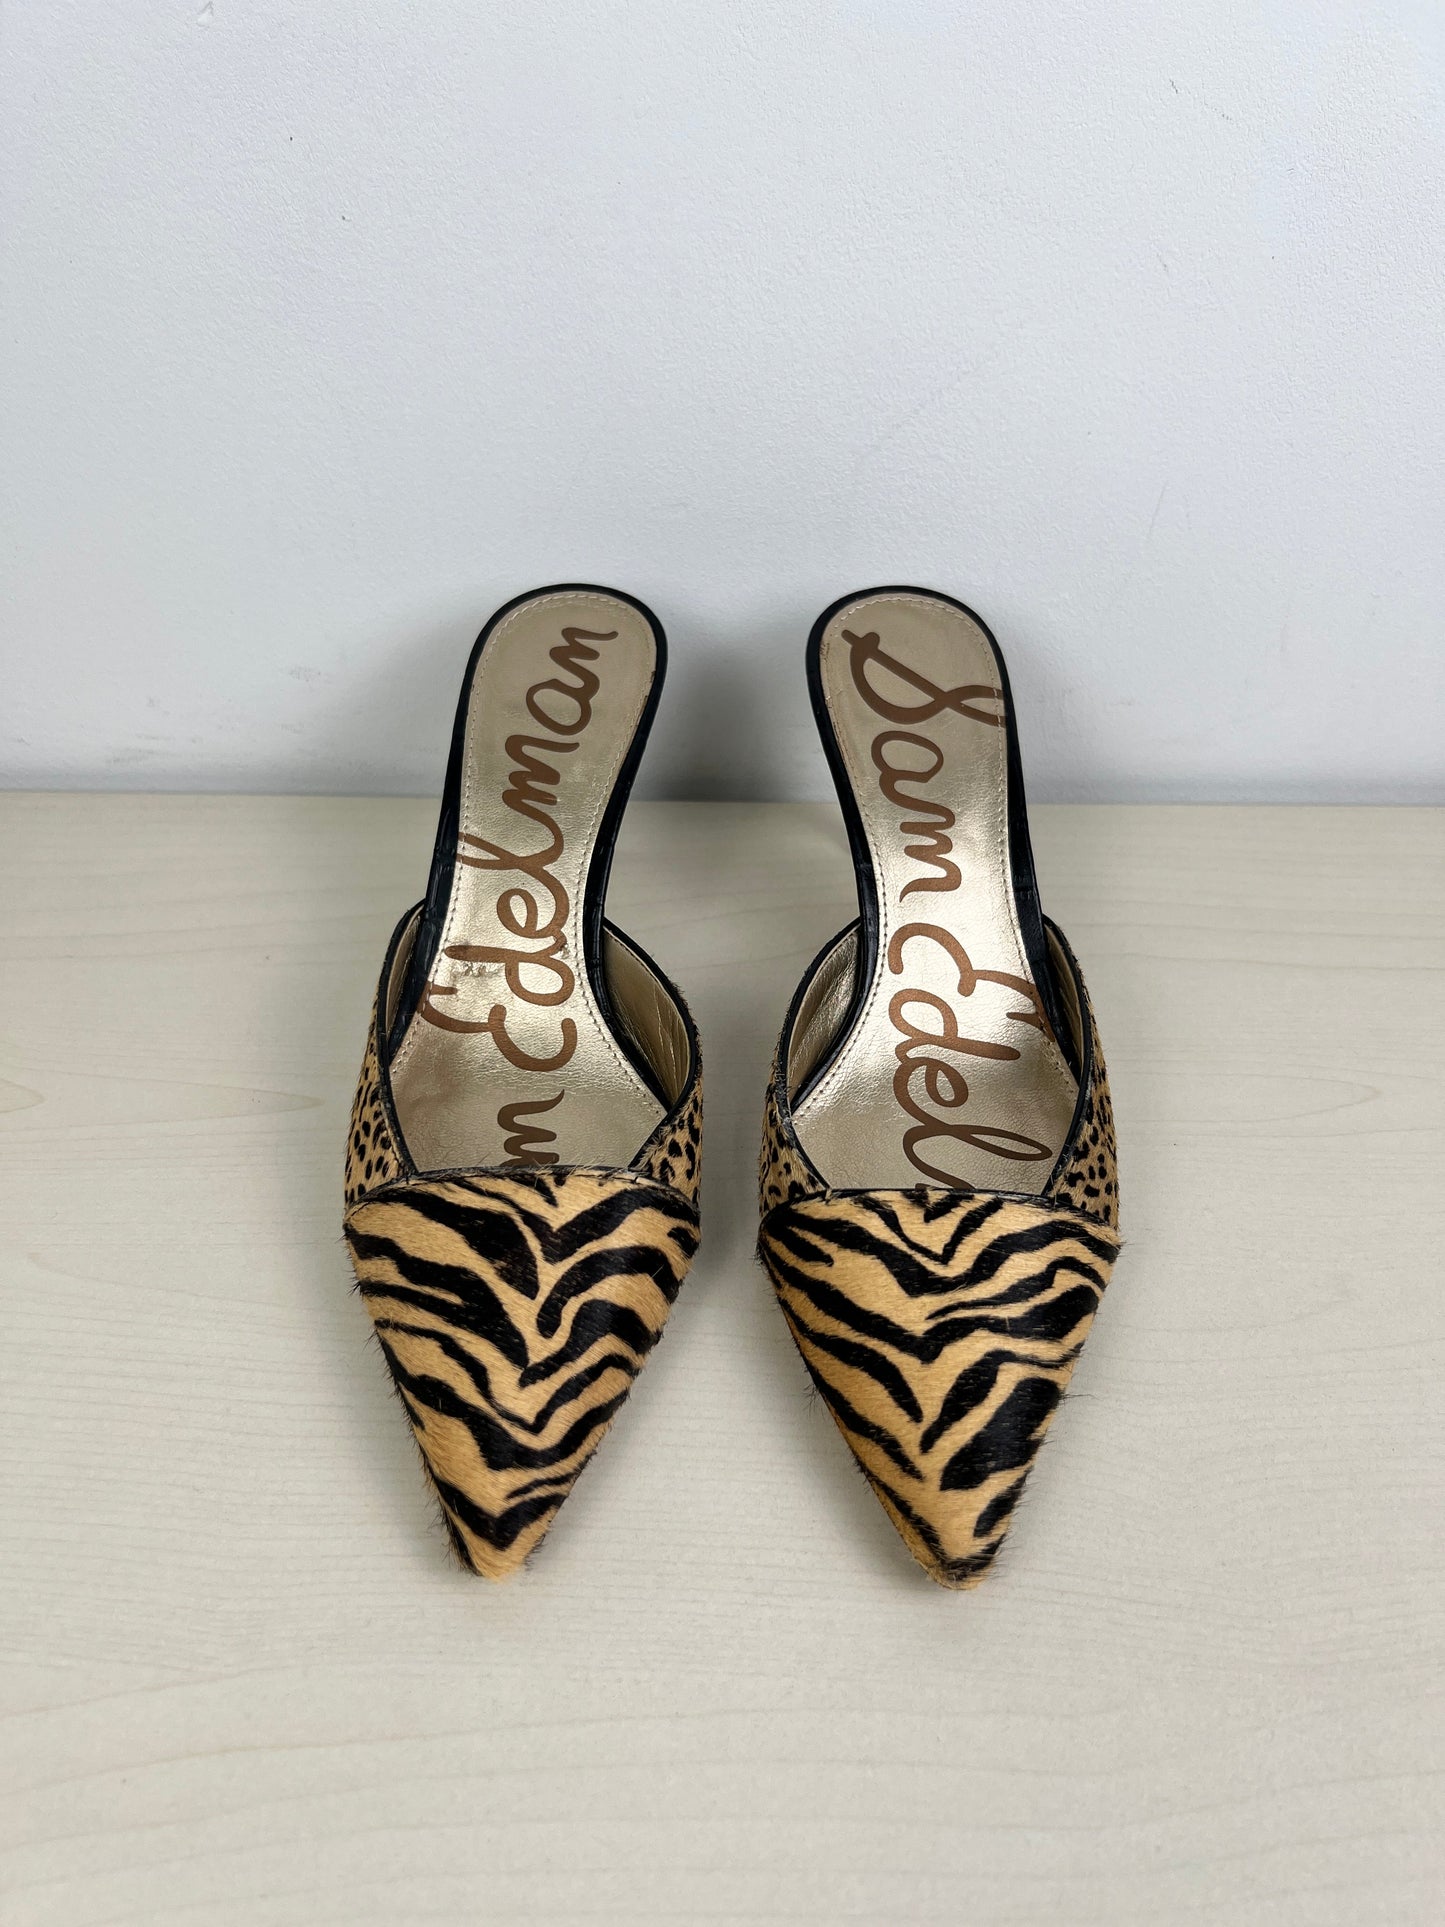 Animal Print Shoes Heels Stiletto Sam Edelman, Size 8